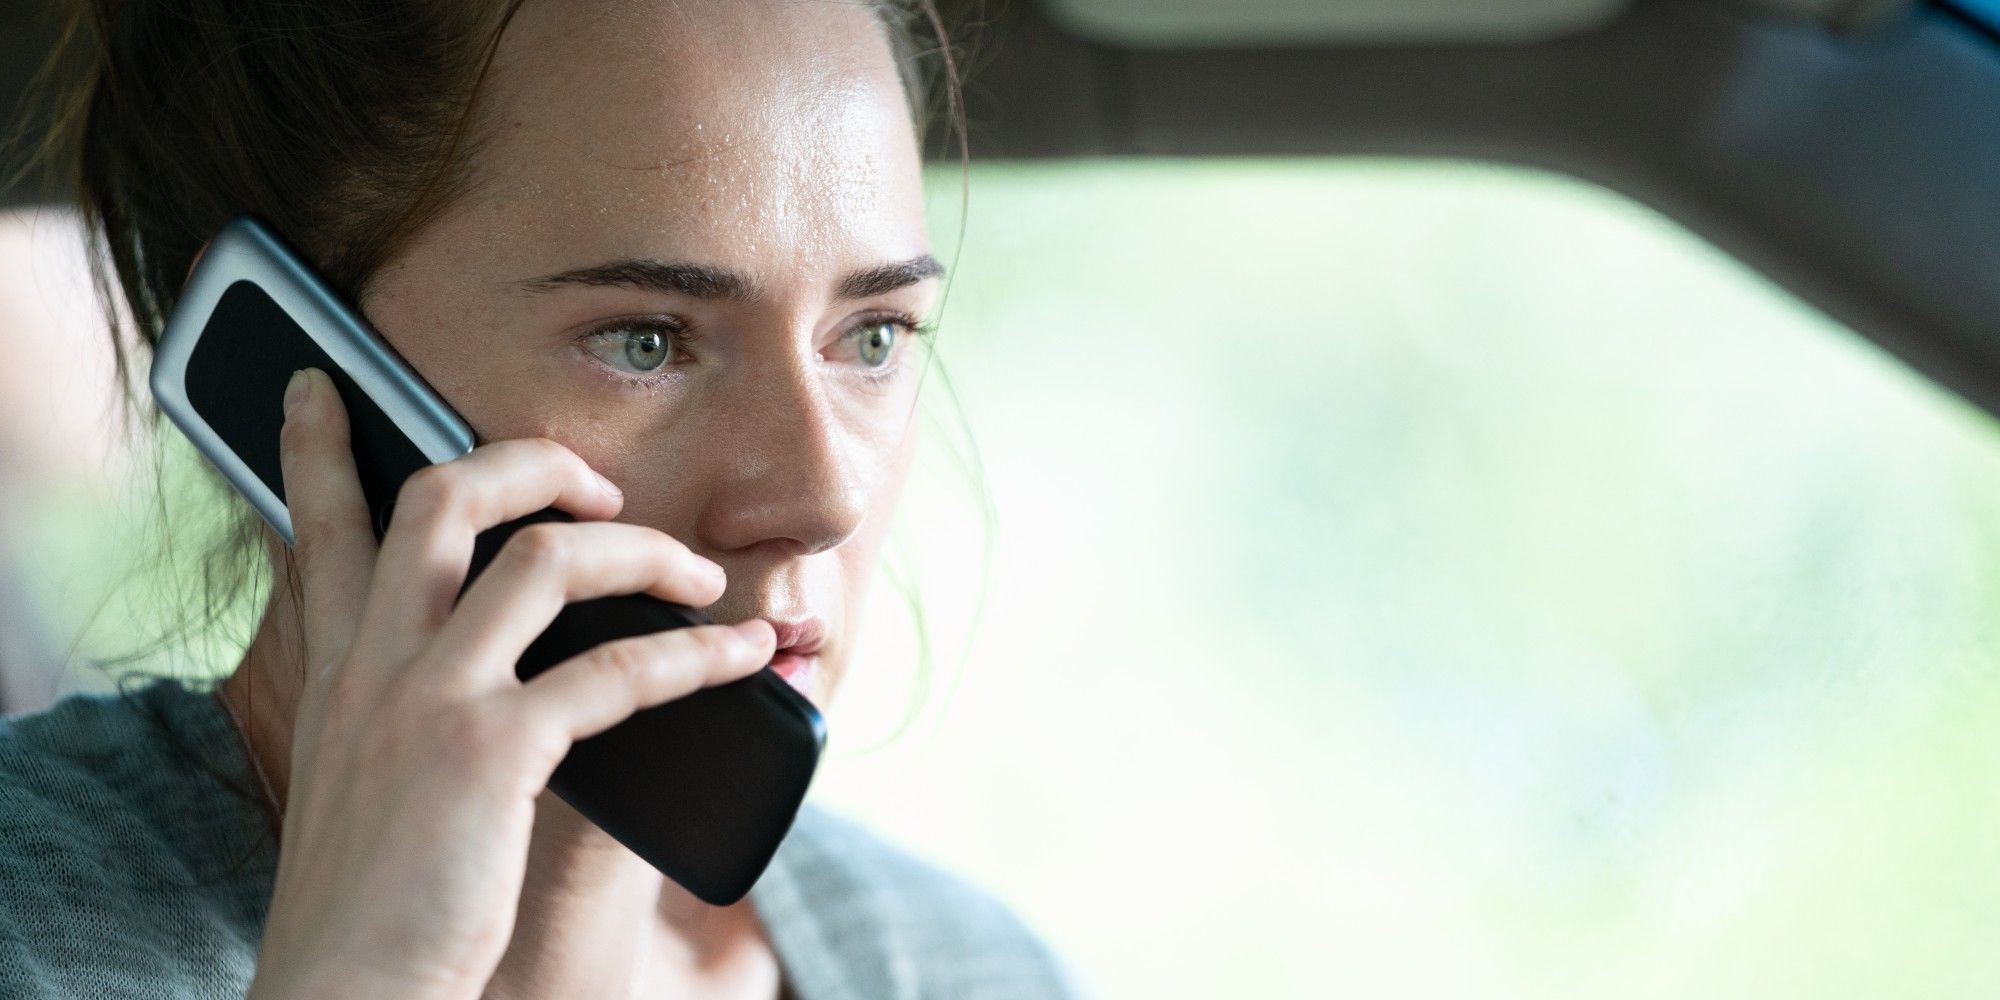 Caren Pistorius as Rachel talking on the phone in Unhinged